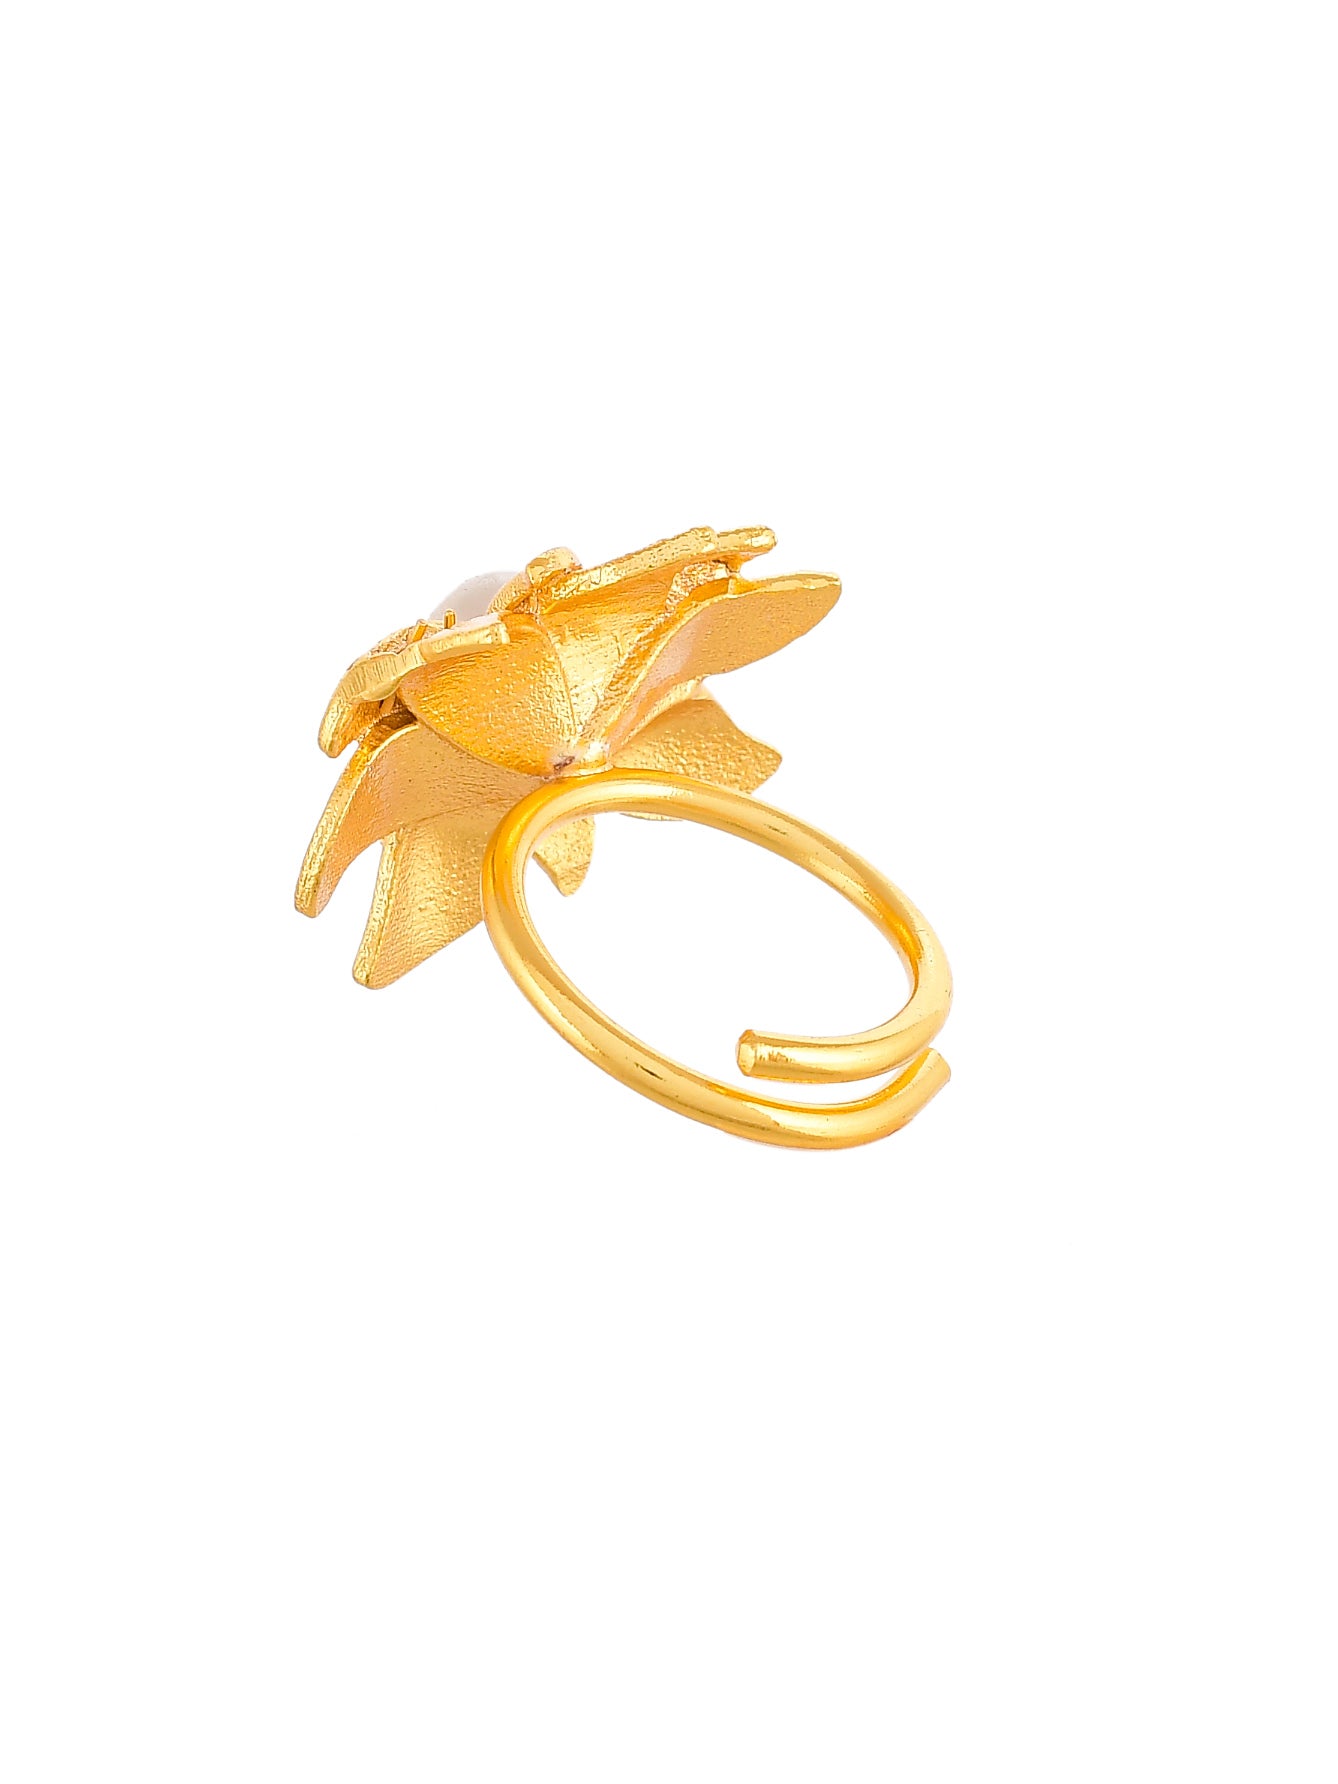 Golden Angel Pearl Flower Adjustable Finger Ring